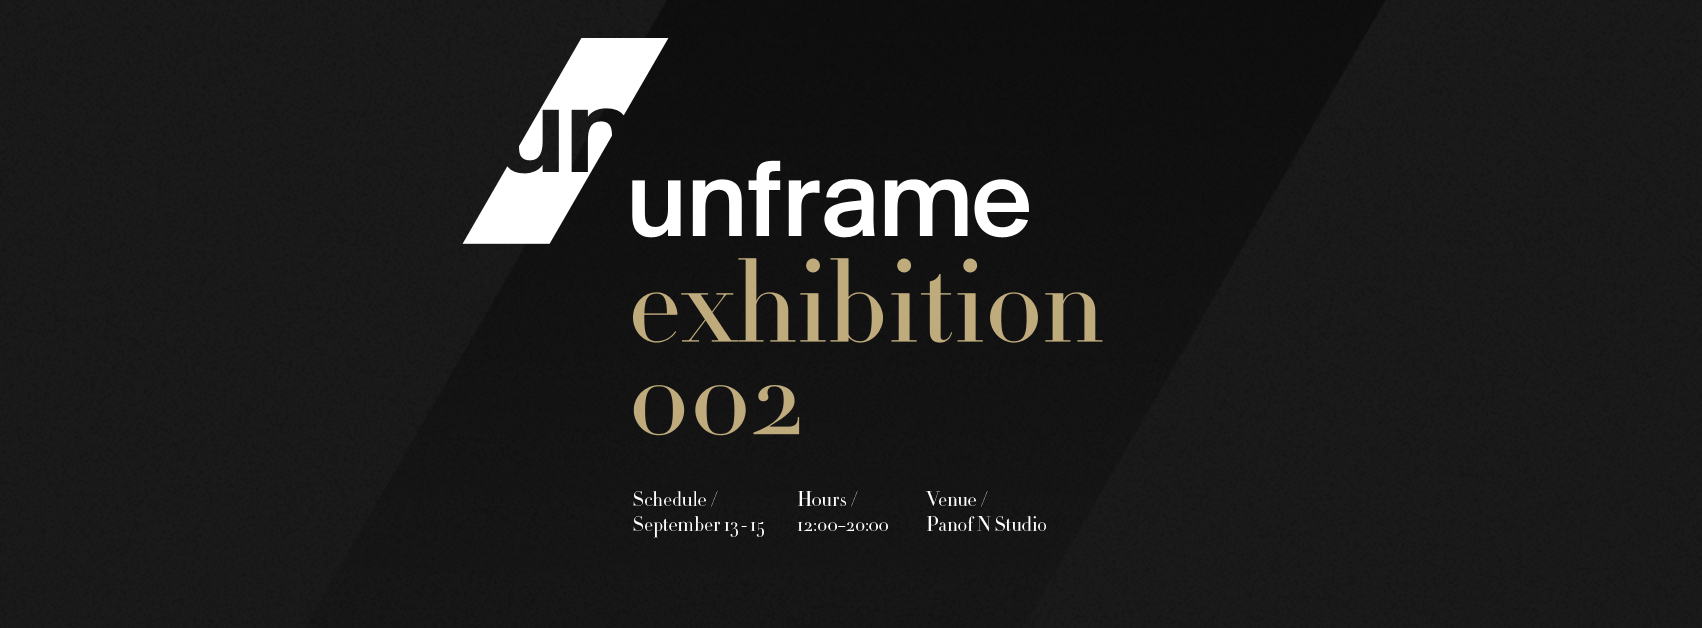 展示会「unframe exhibition 002」